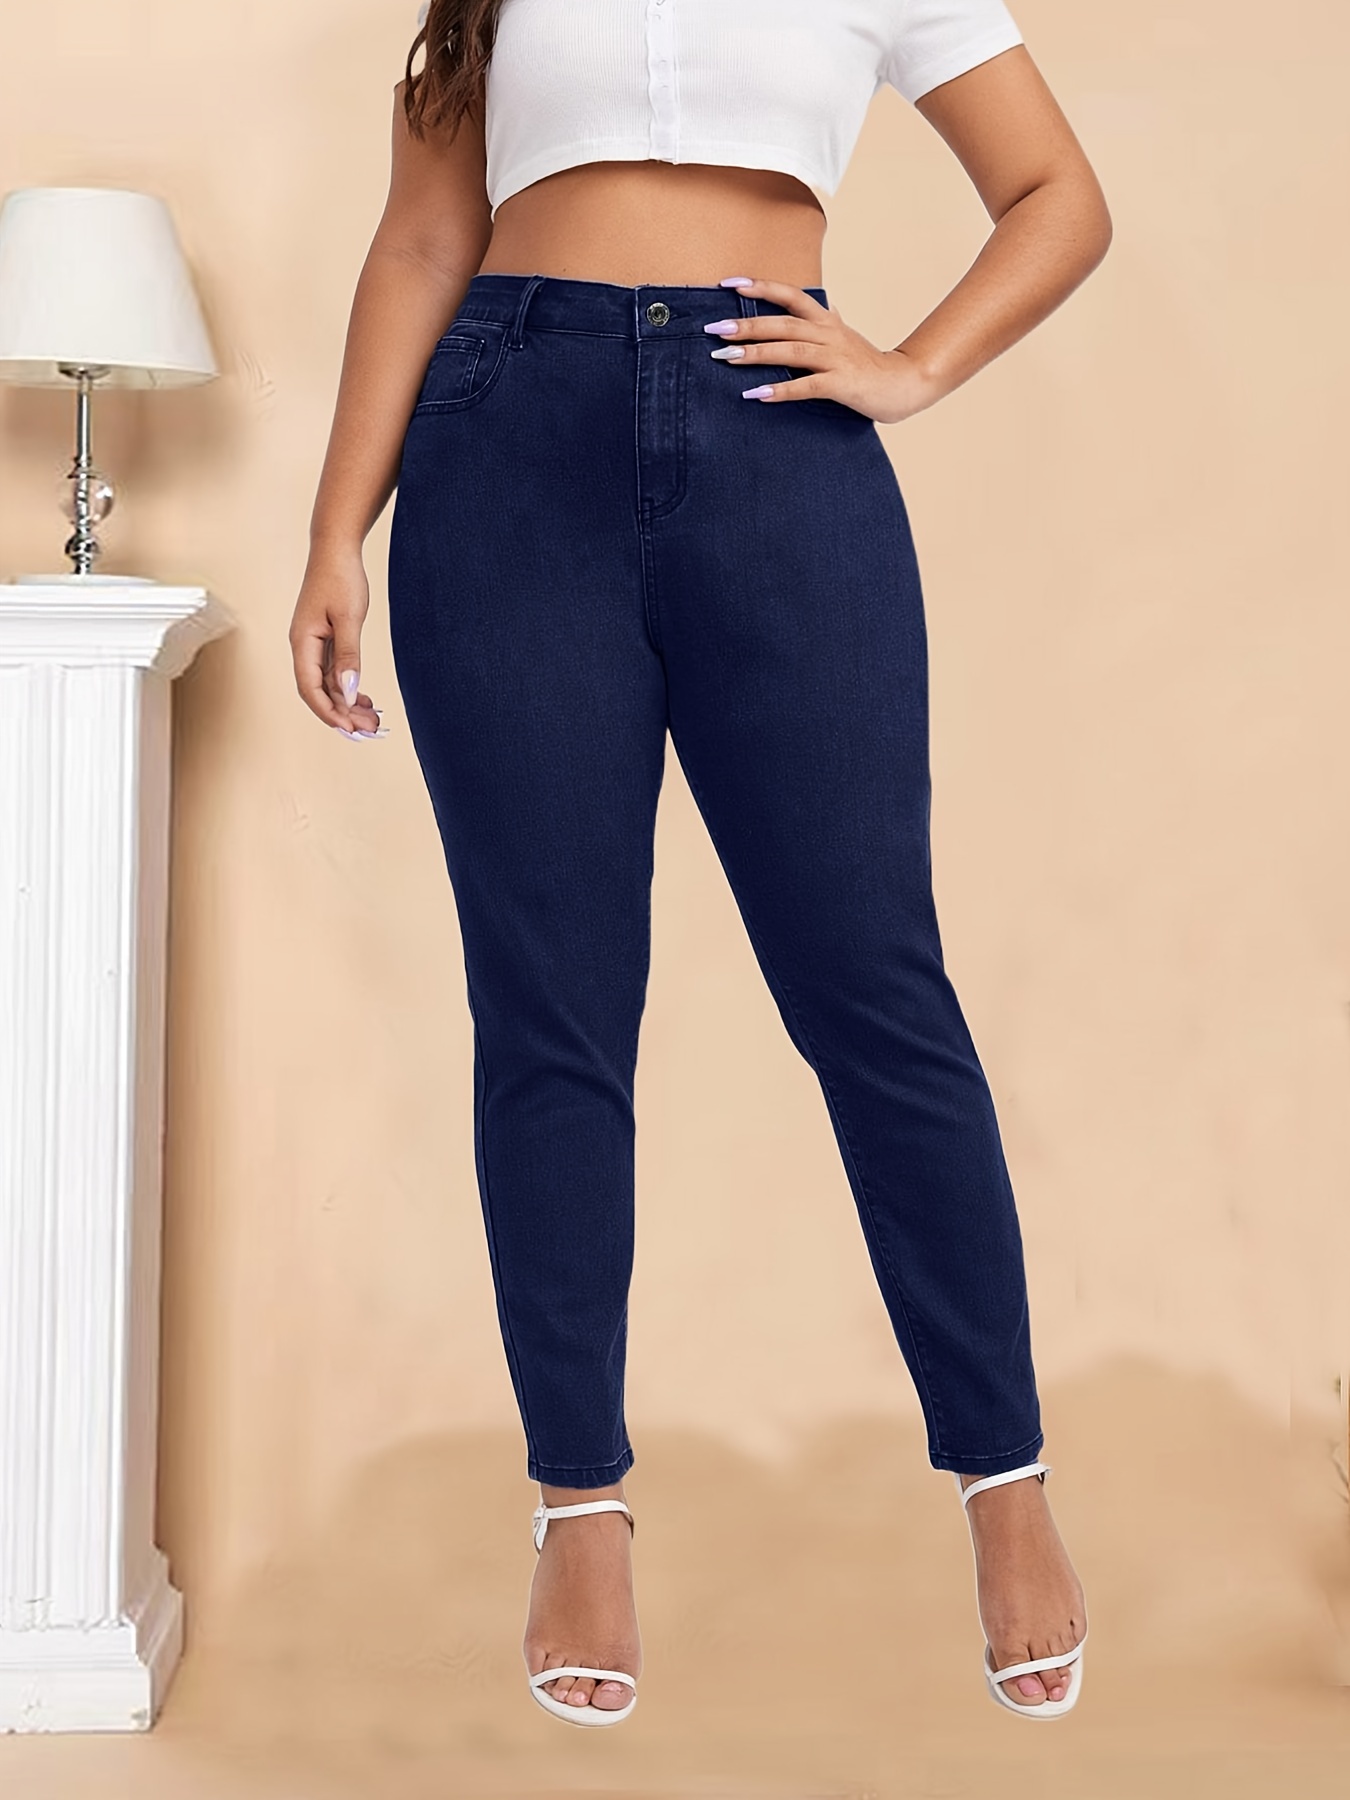 Size Regular Plus Pants Women Long Denim High Slim Jeans Waist